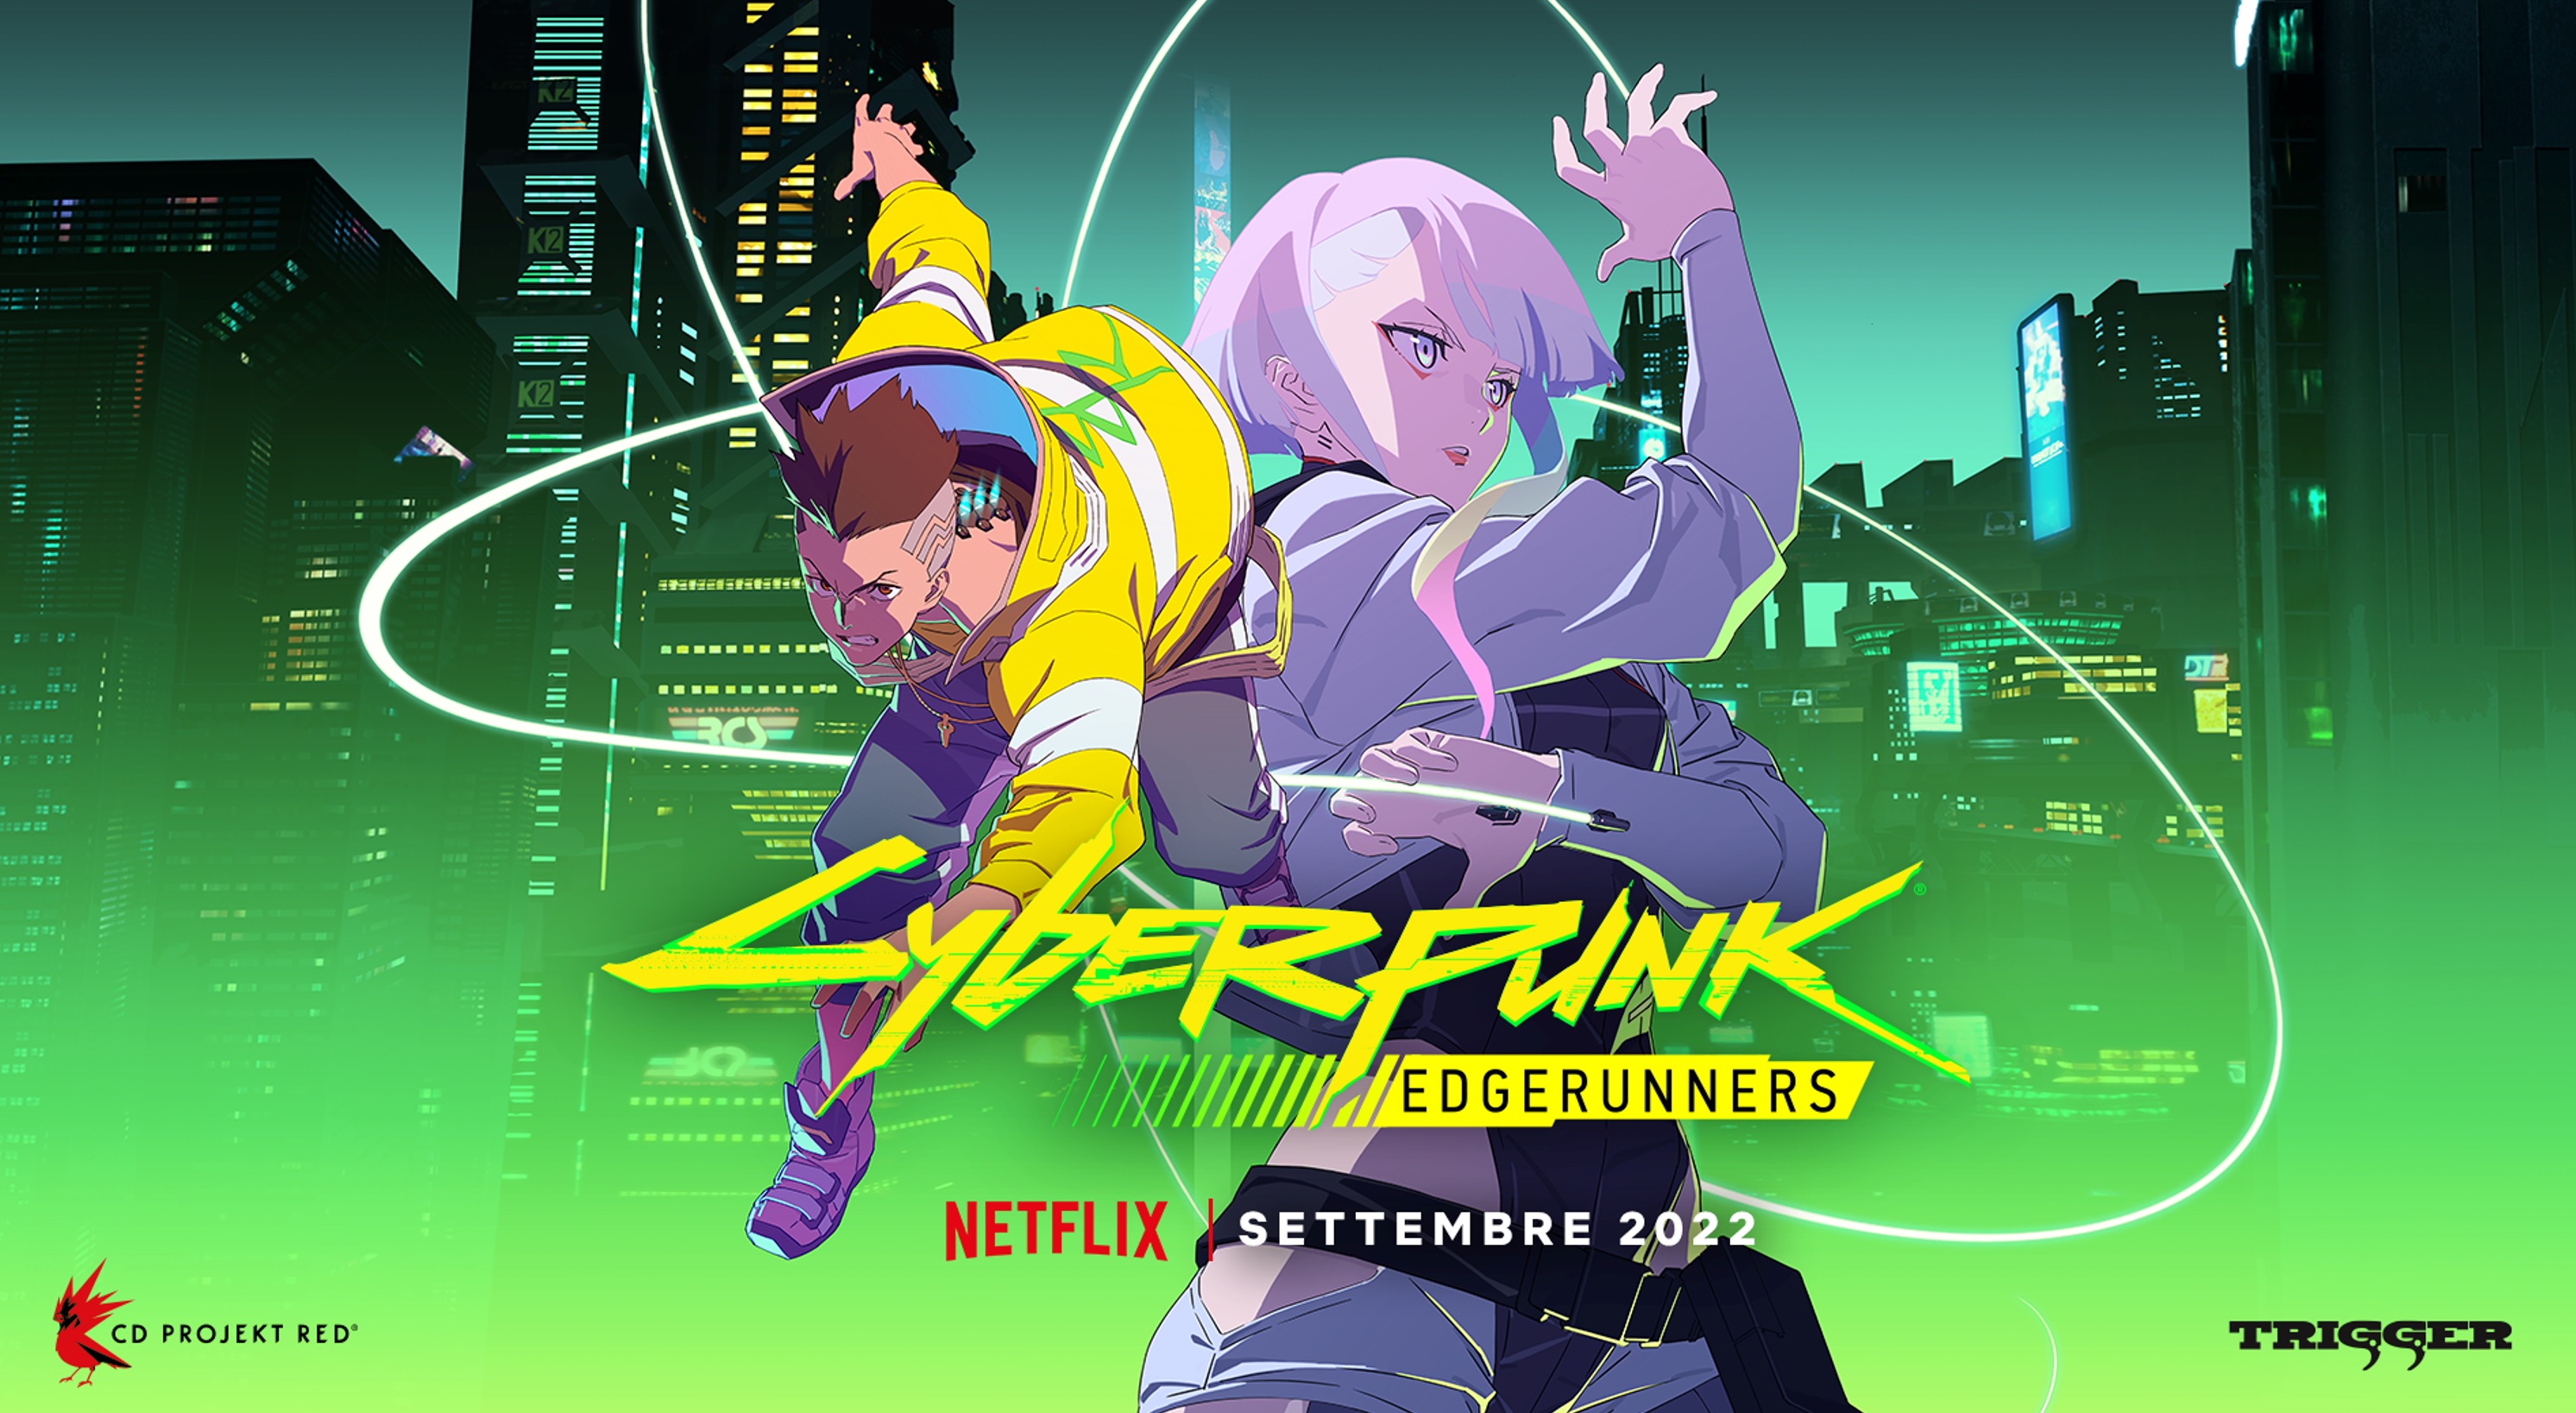 Cyberpunk: Edgerunners arriverà su Netflix